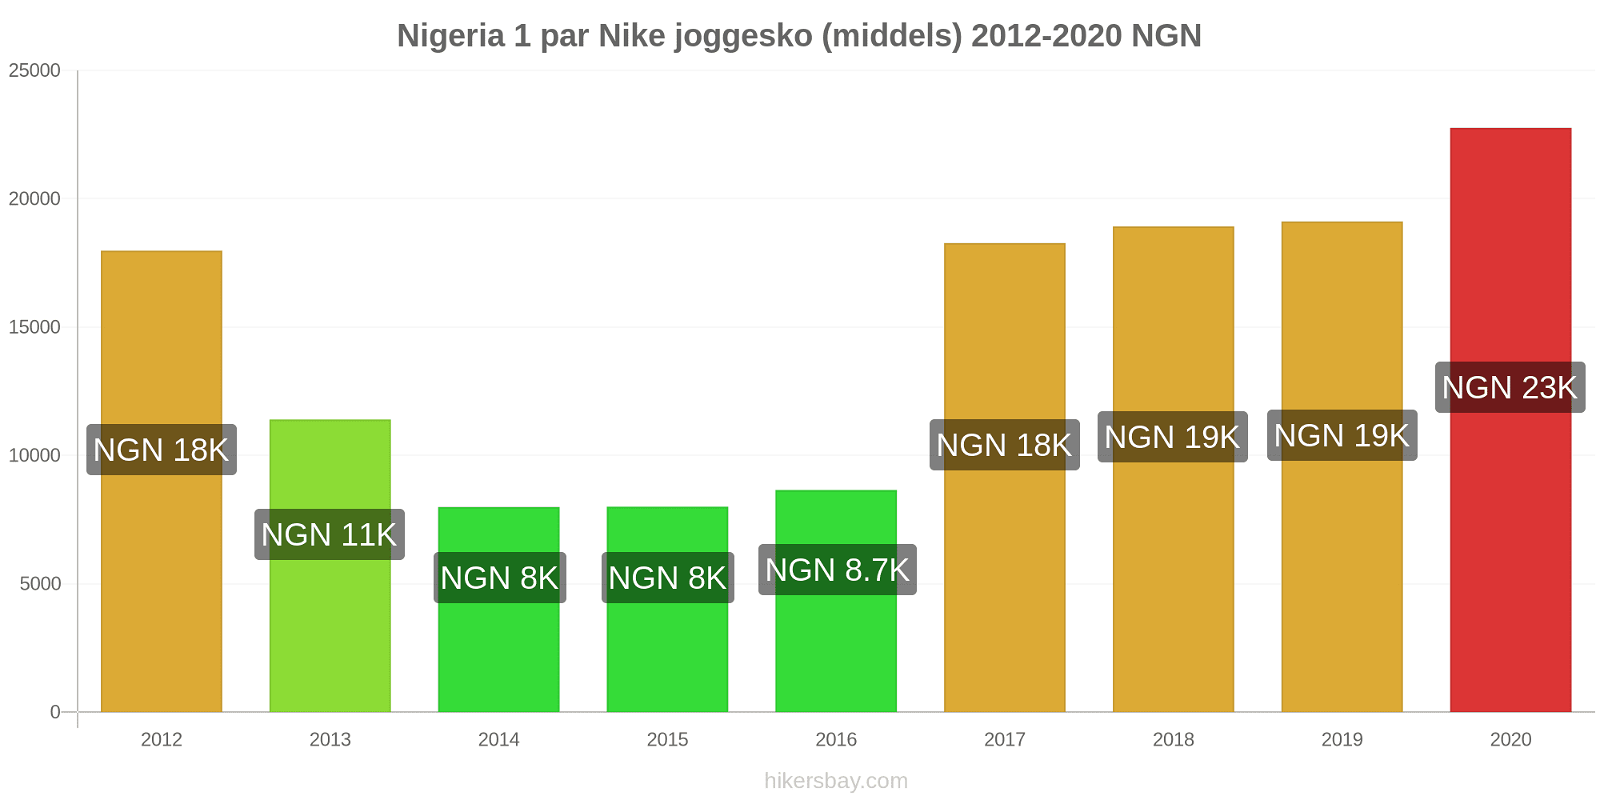 Nigeria prisendringer 1 par Nike joggesko (middels) hikersbay.com